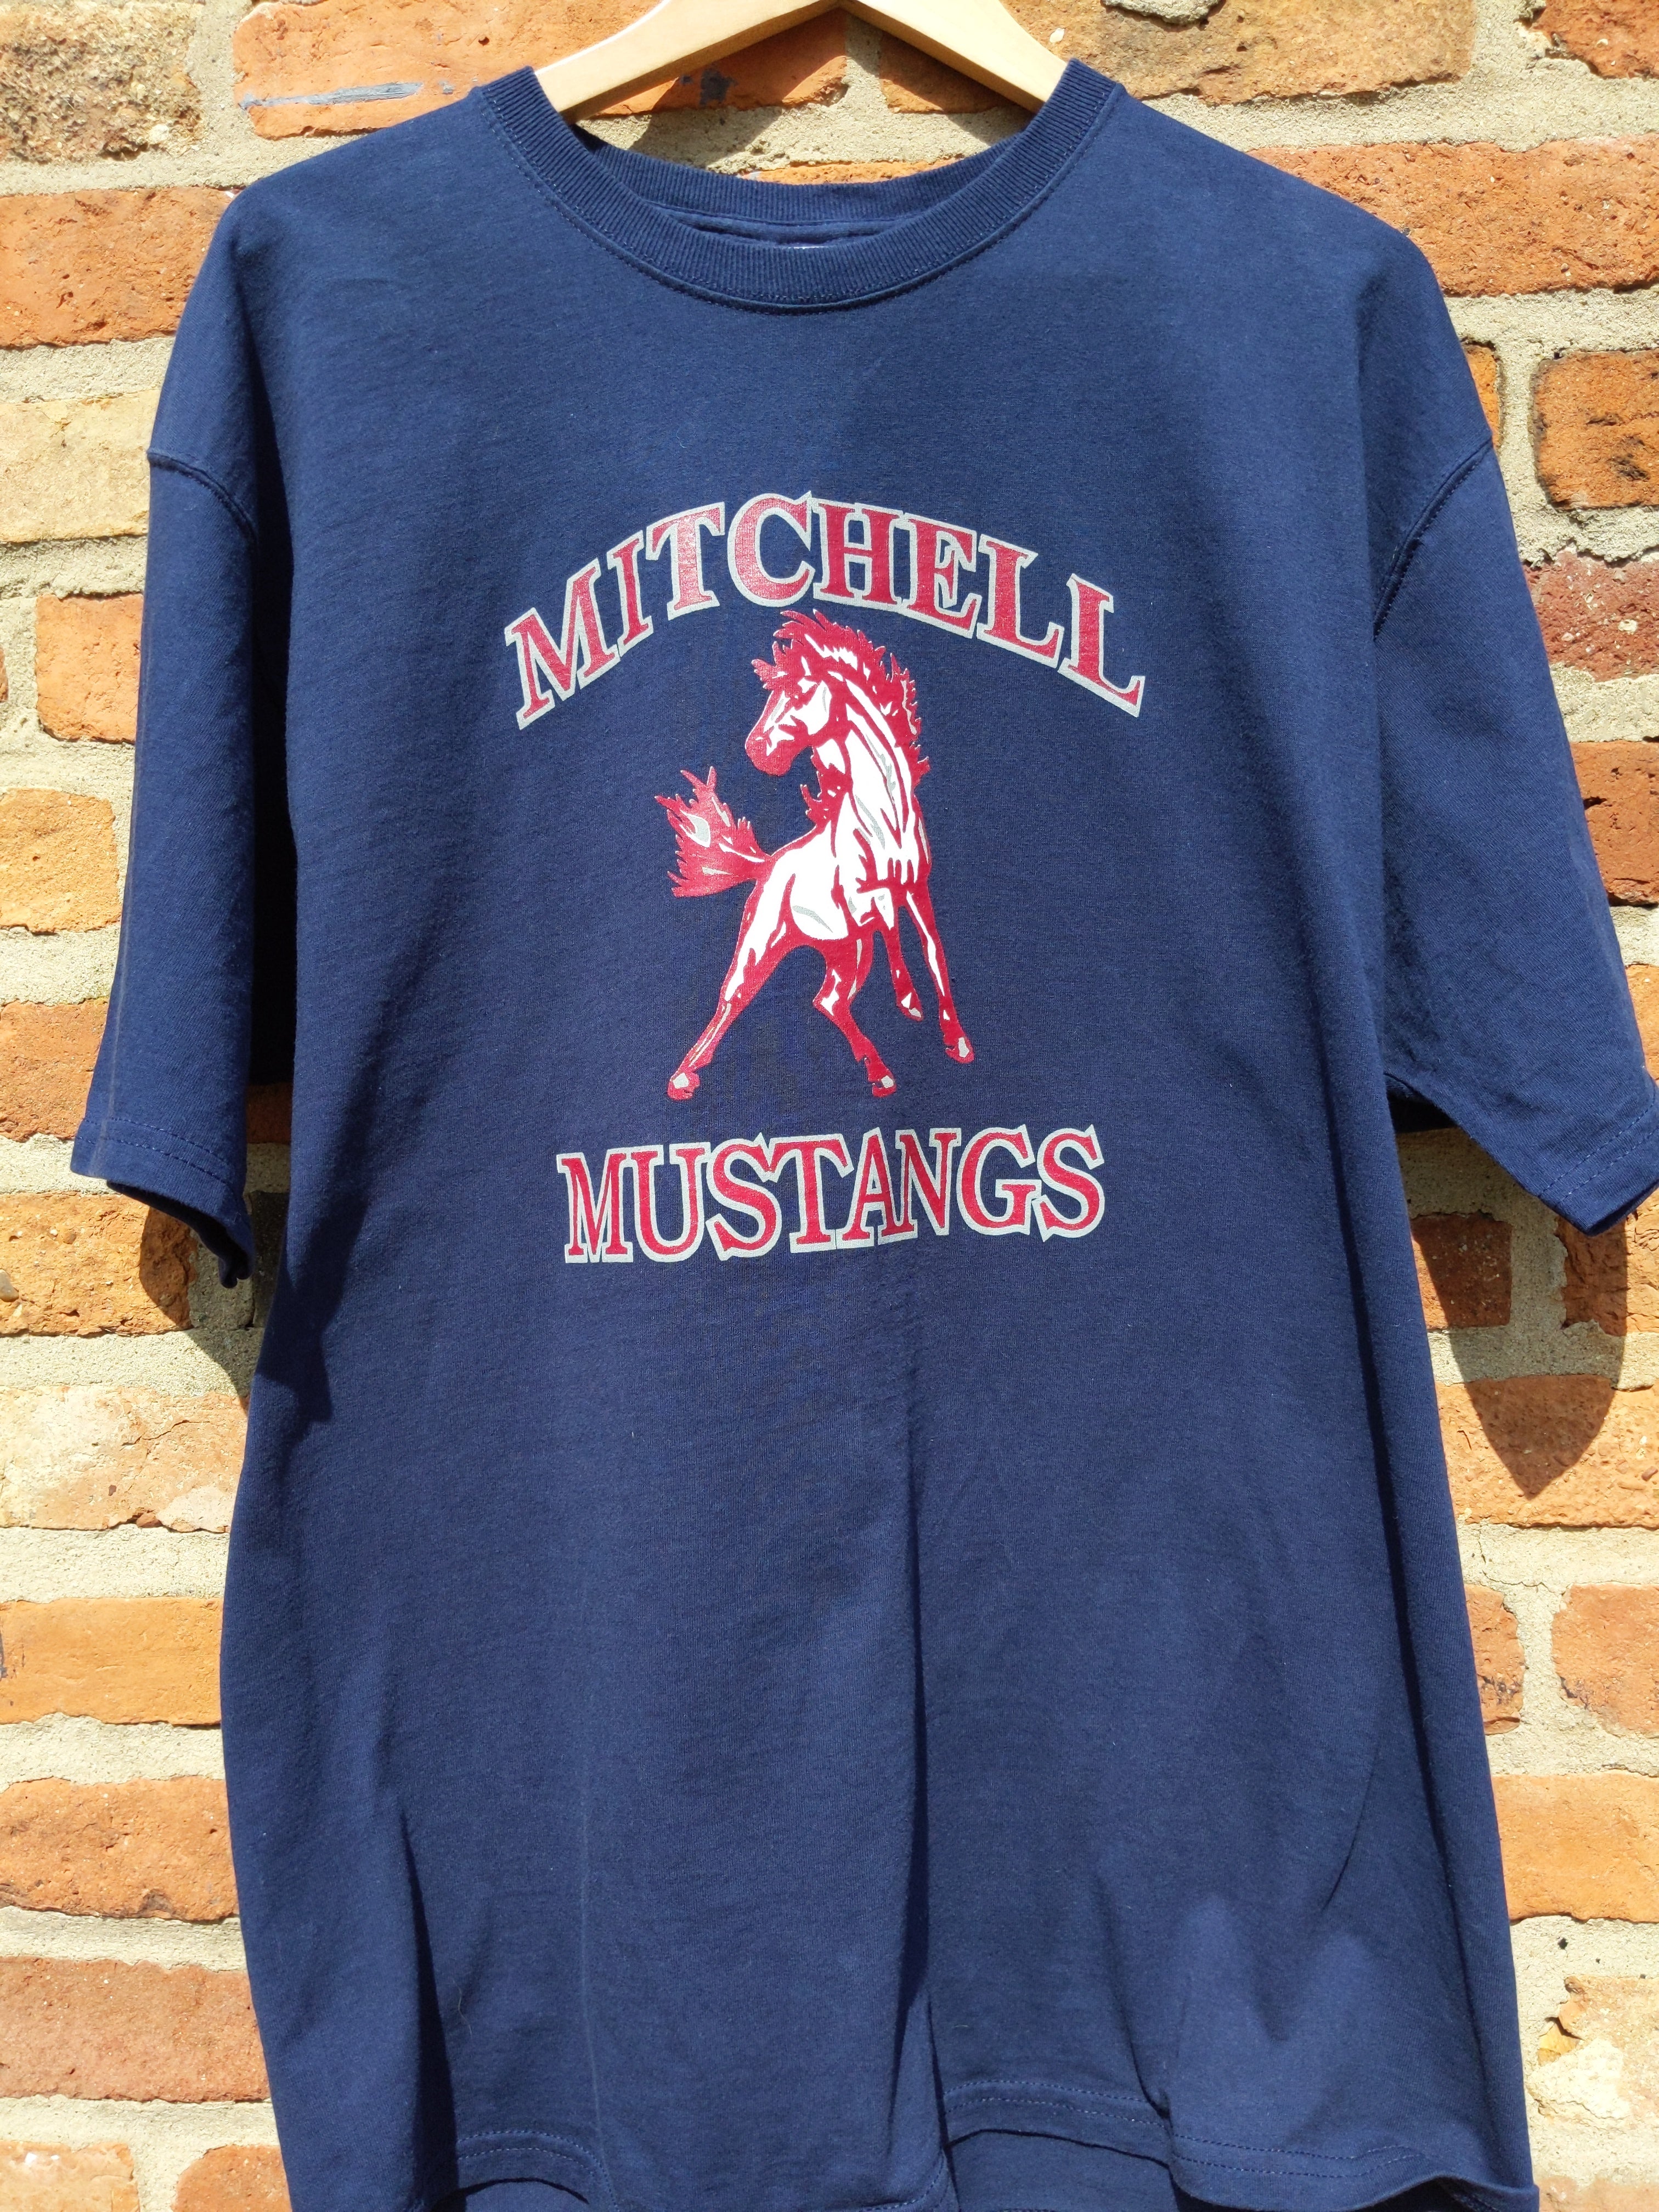 Retro Mitchell Mustangs t-shirt XL